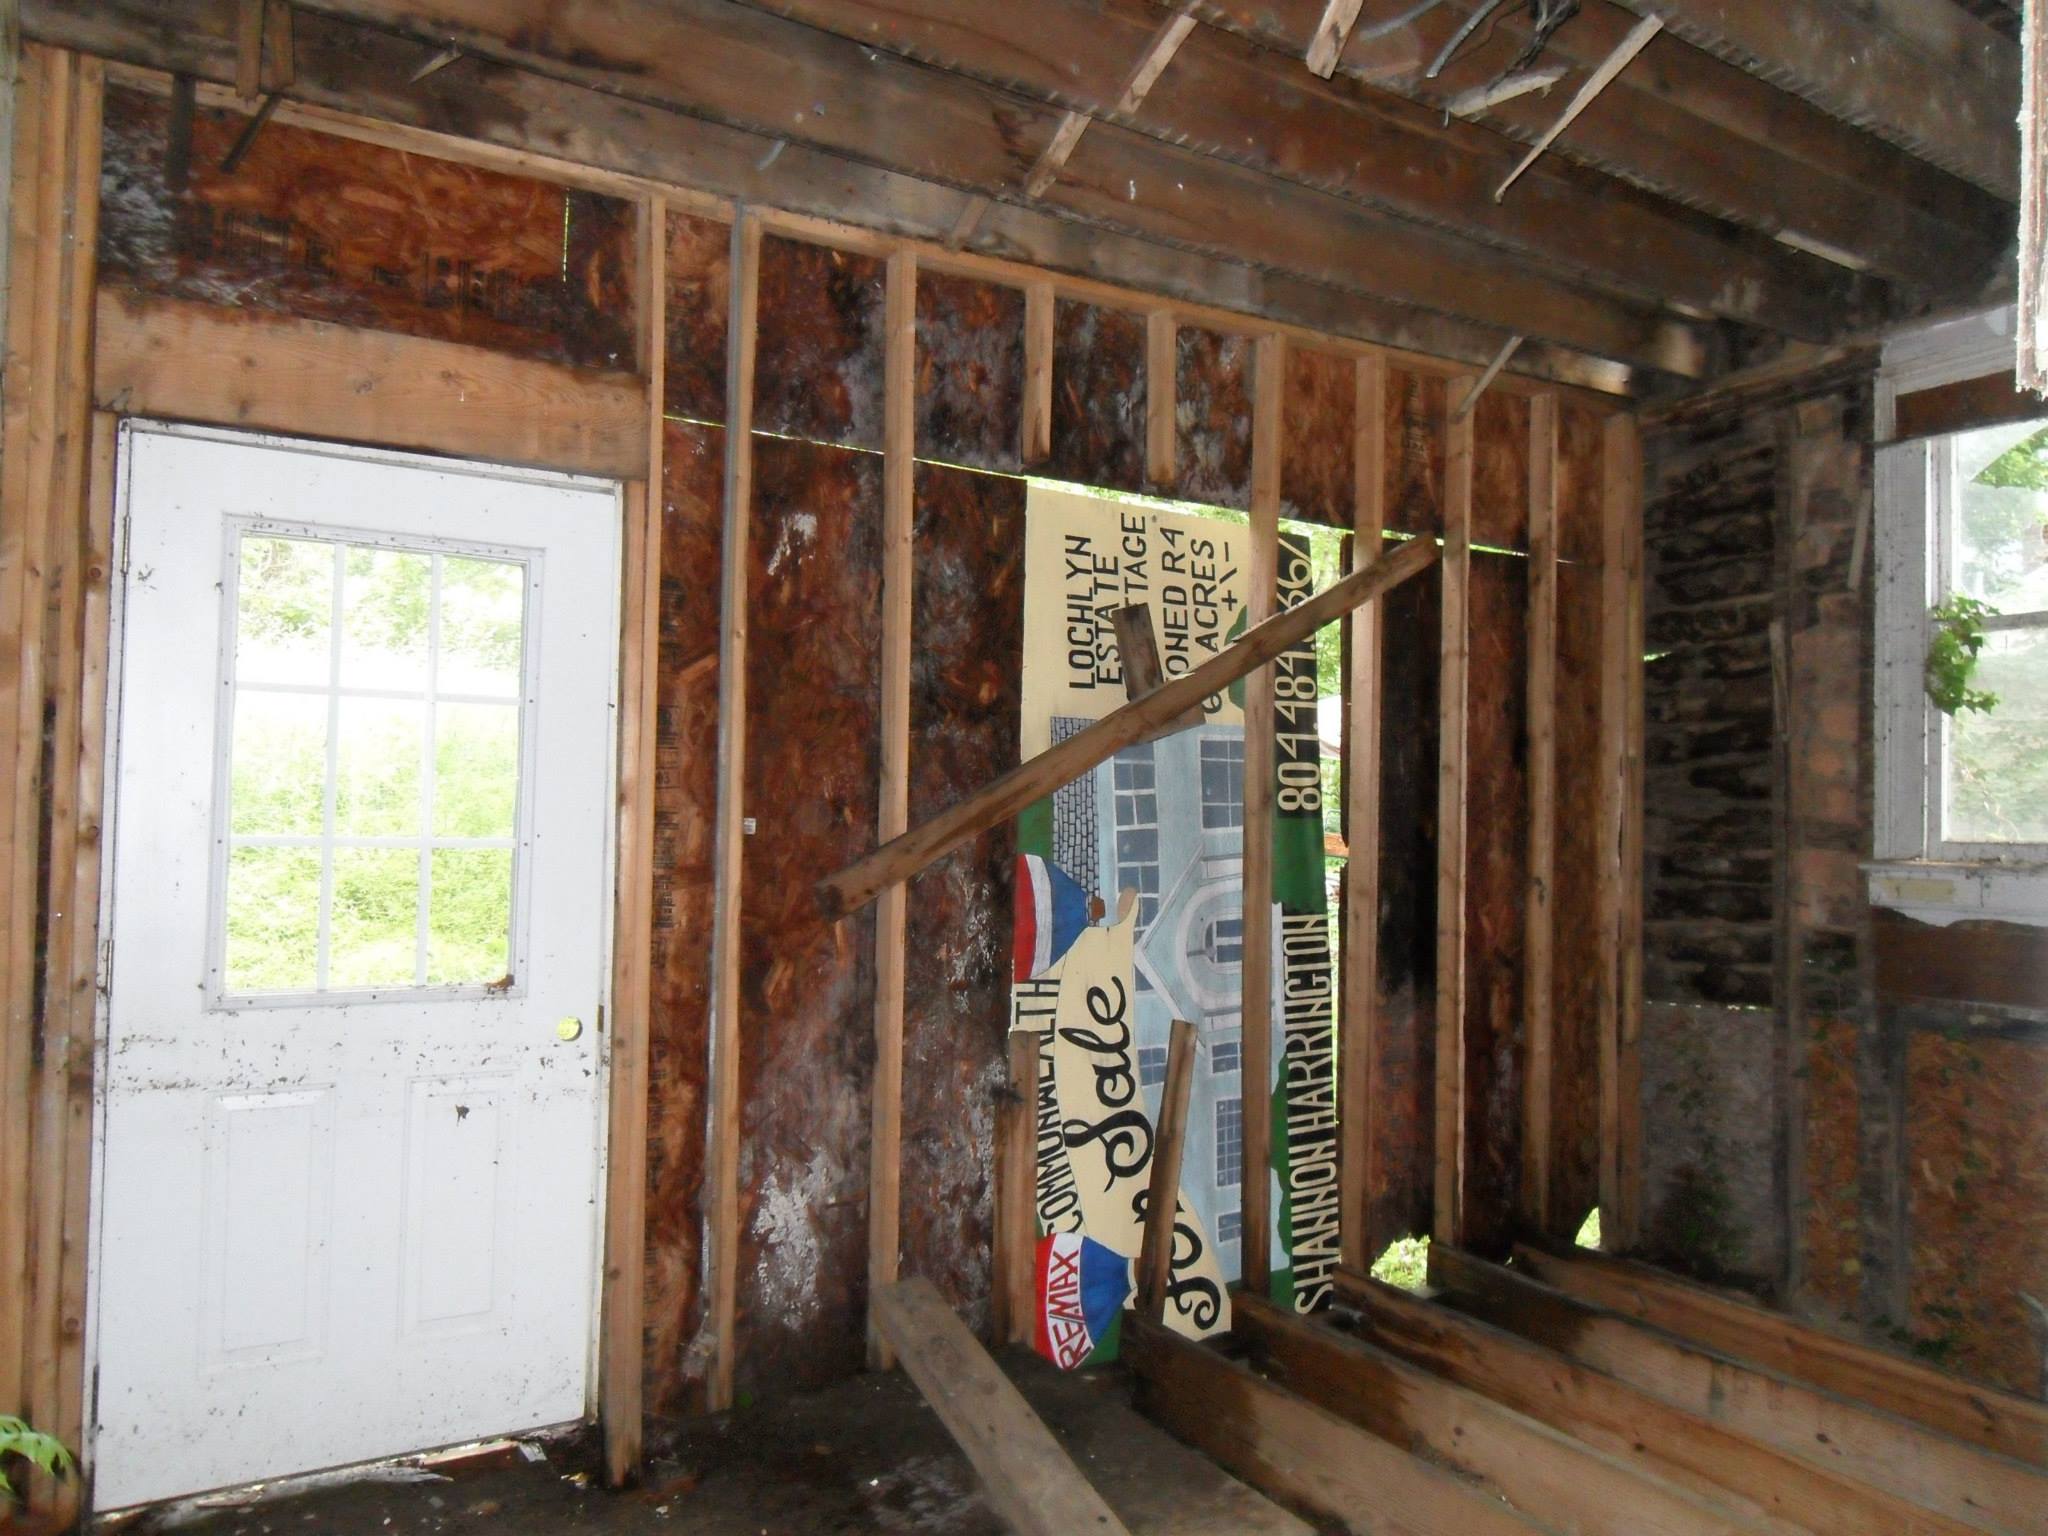 619 frederick st before renovation - door to backyard